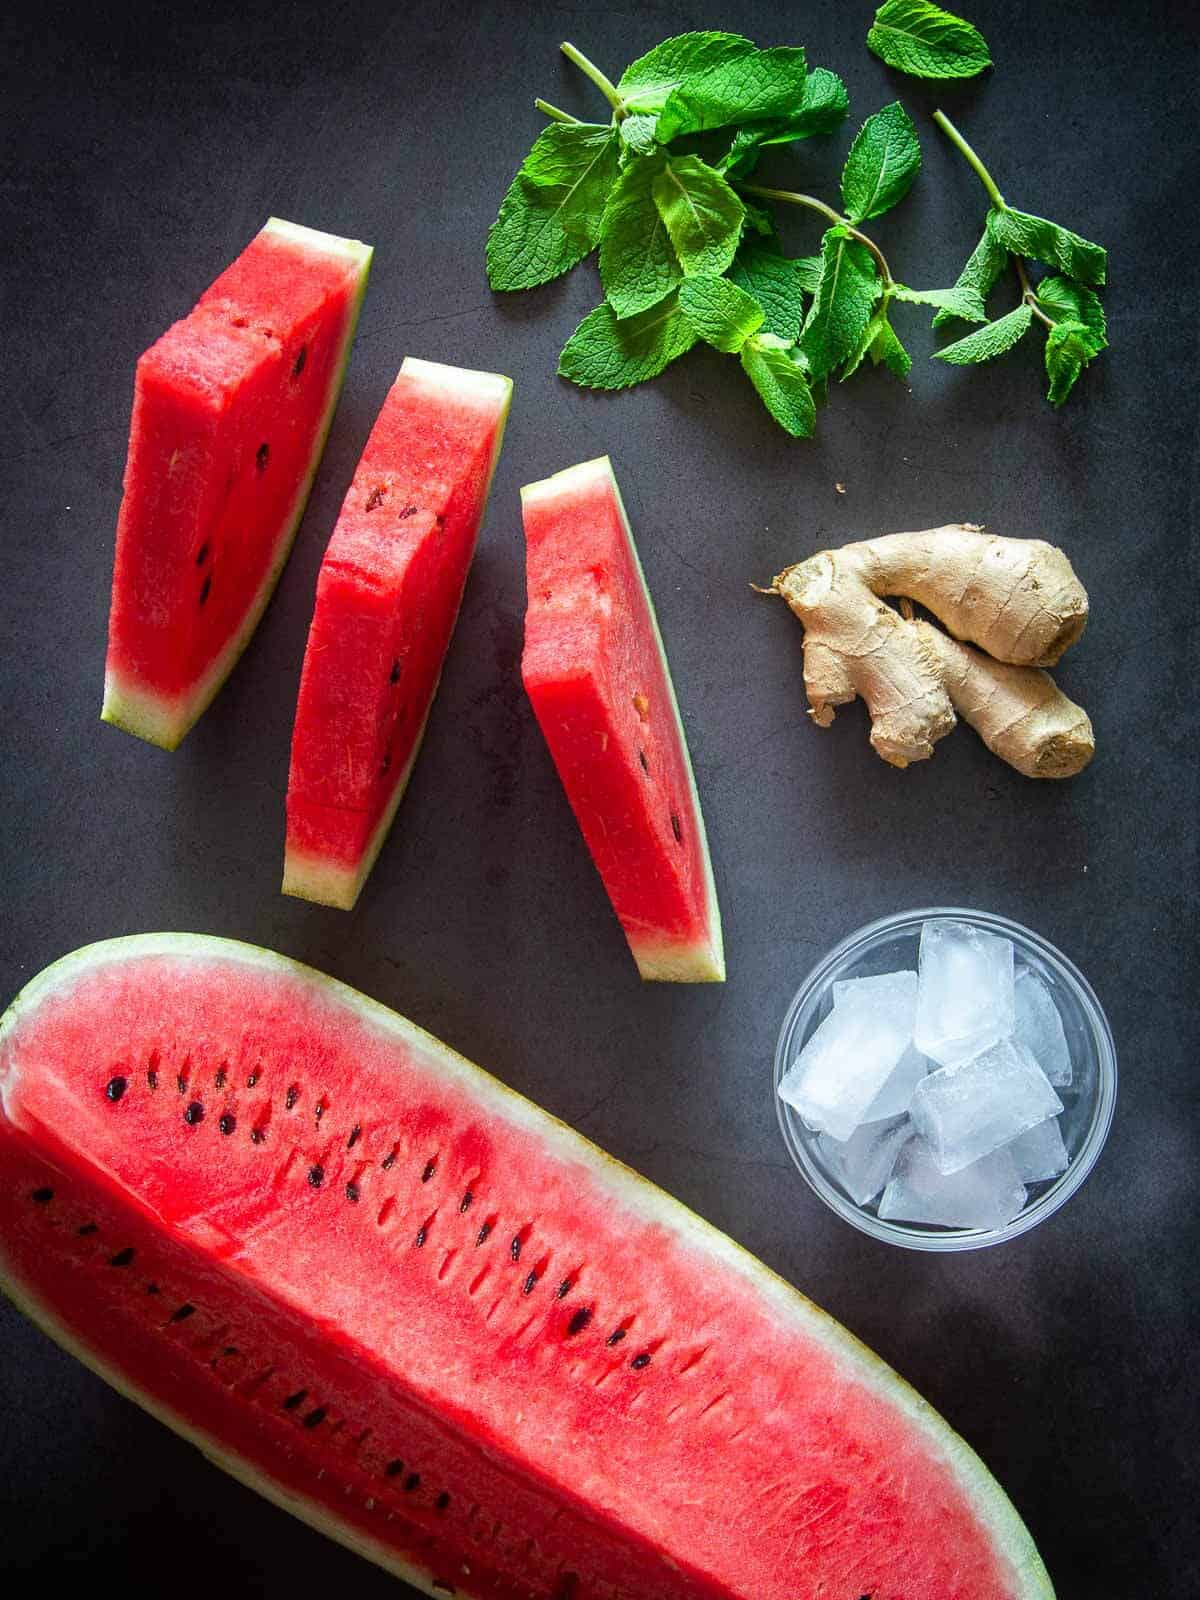 Watermelon Smoothie Ingredients